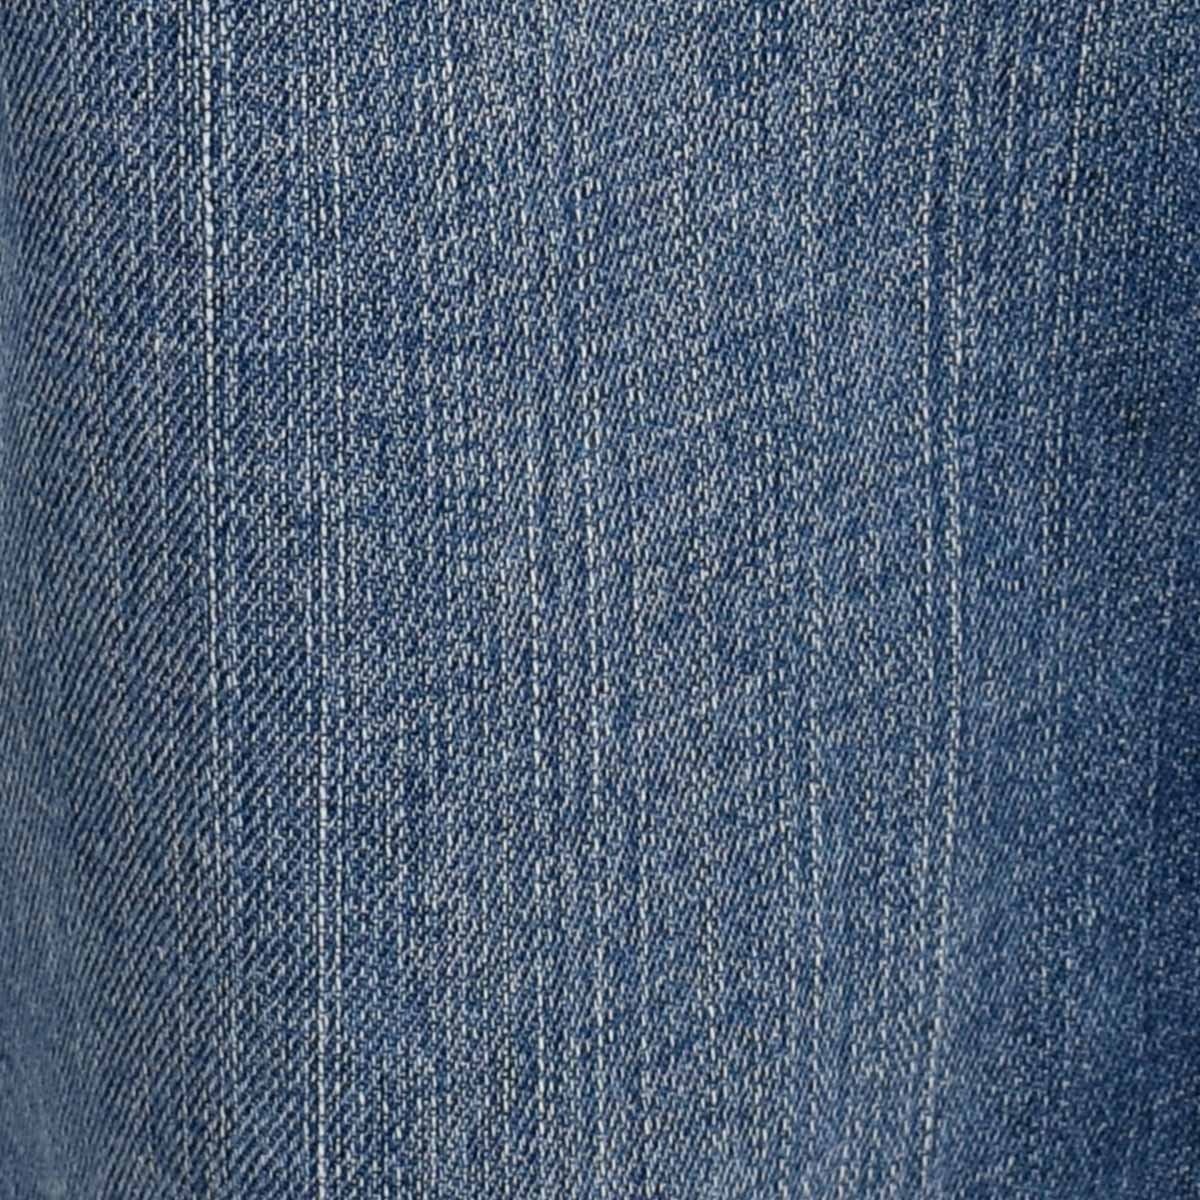 Jeans Slim Fit Azul para Hombre Modelo Elo 01109Sc48 Lee